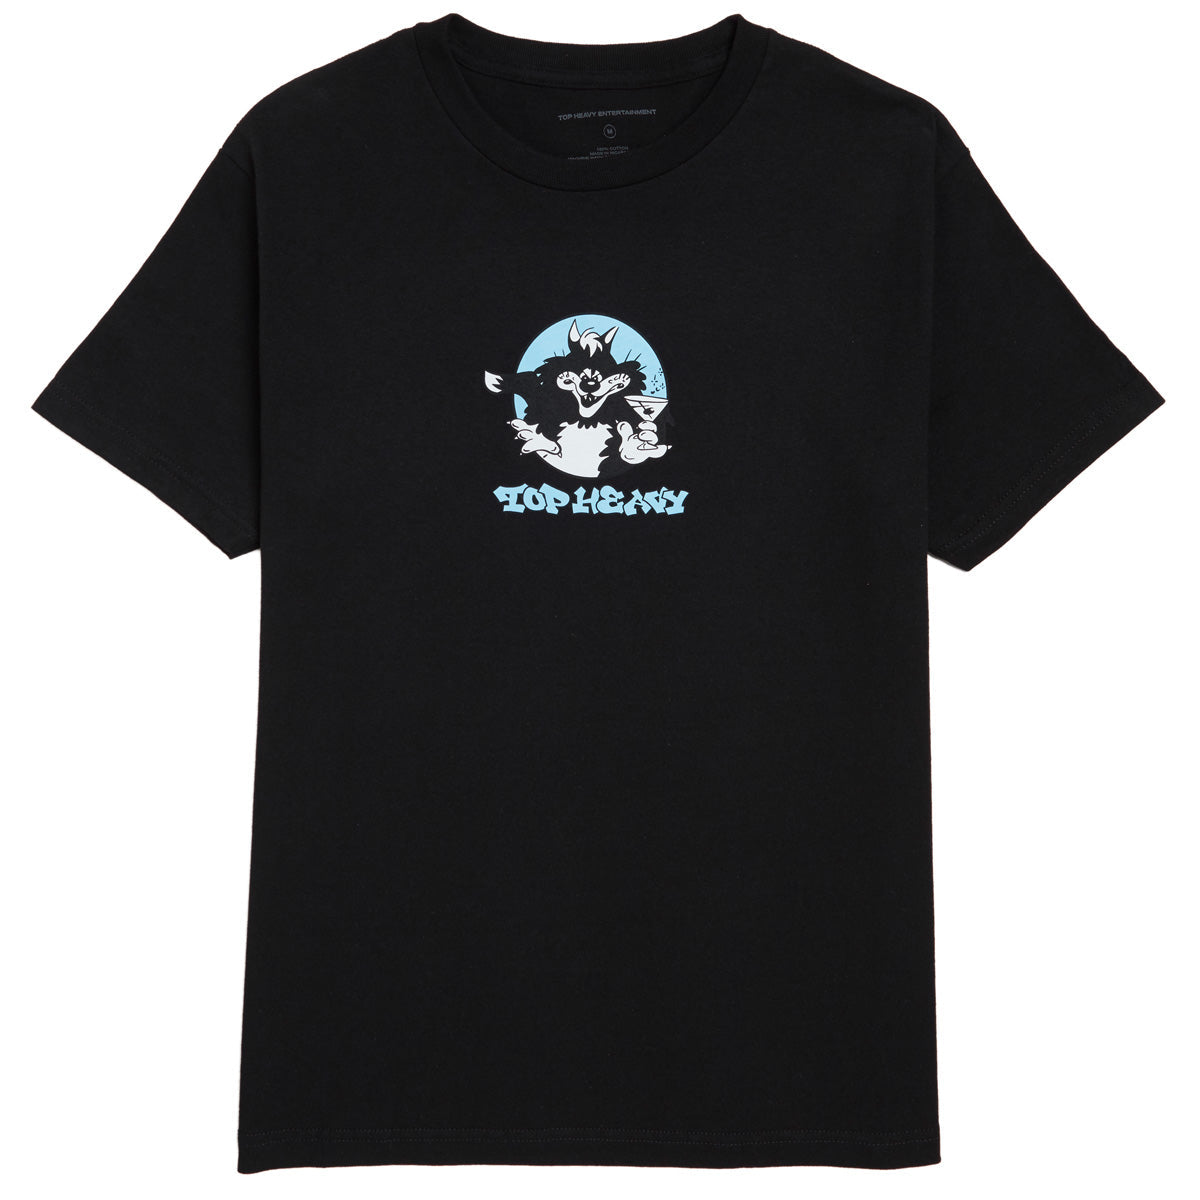 Top Heavy Martin T-Shirt - Black image 1